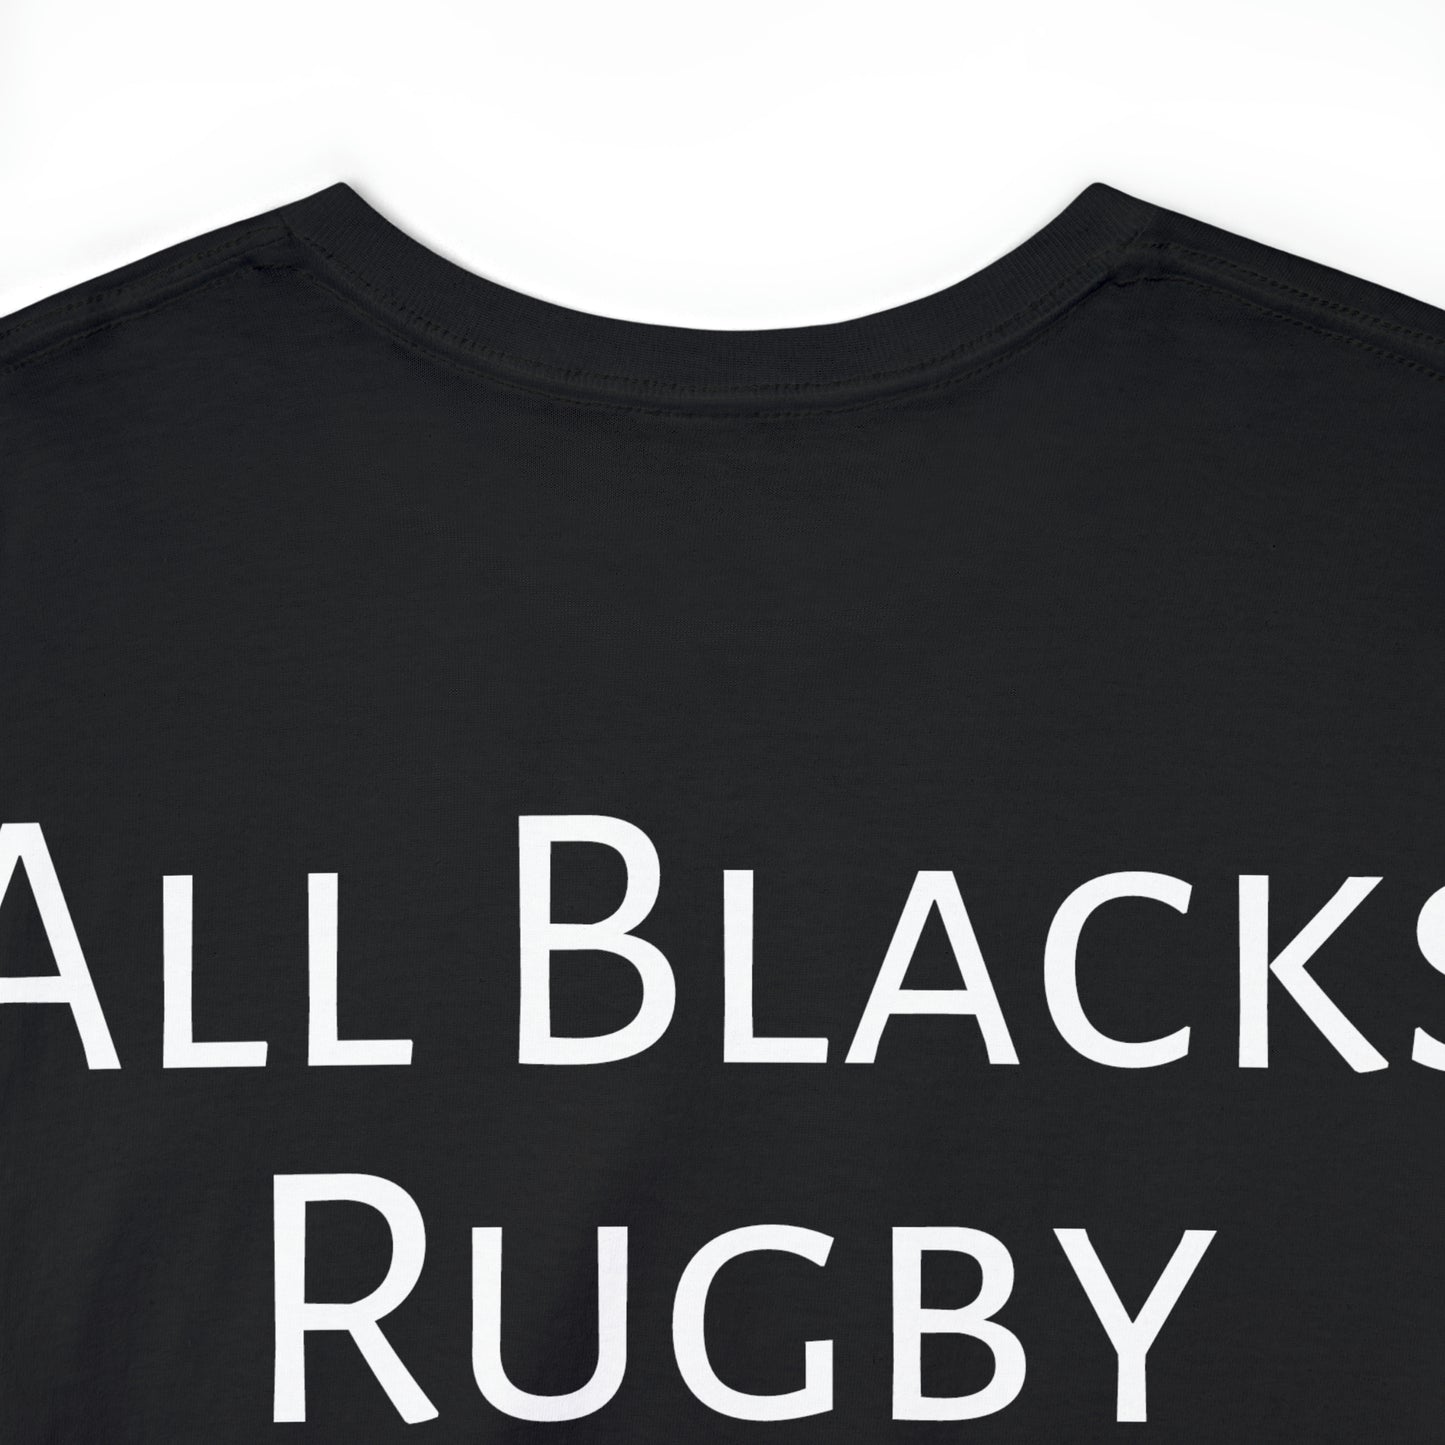 Ready All Blacks - black shirt